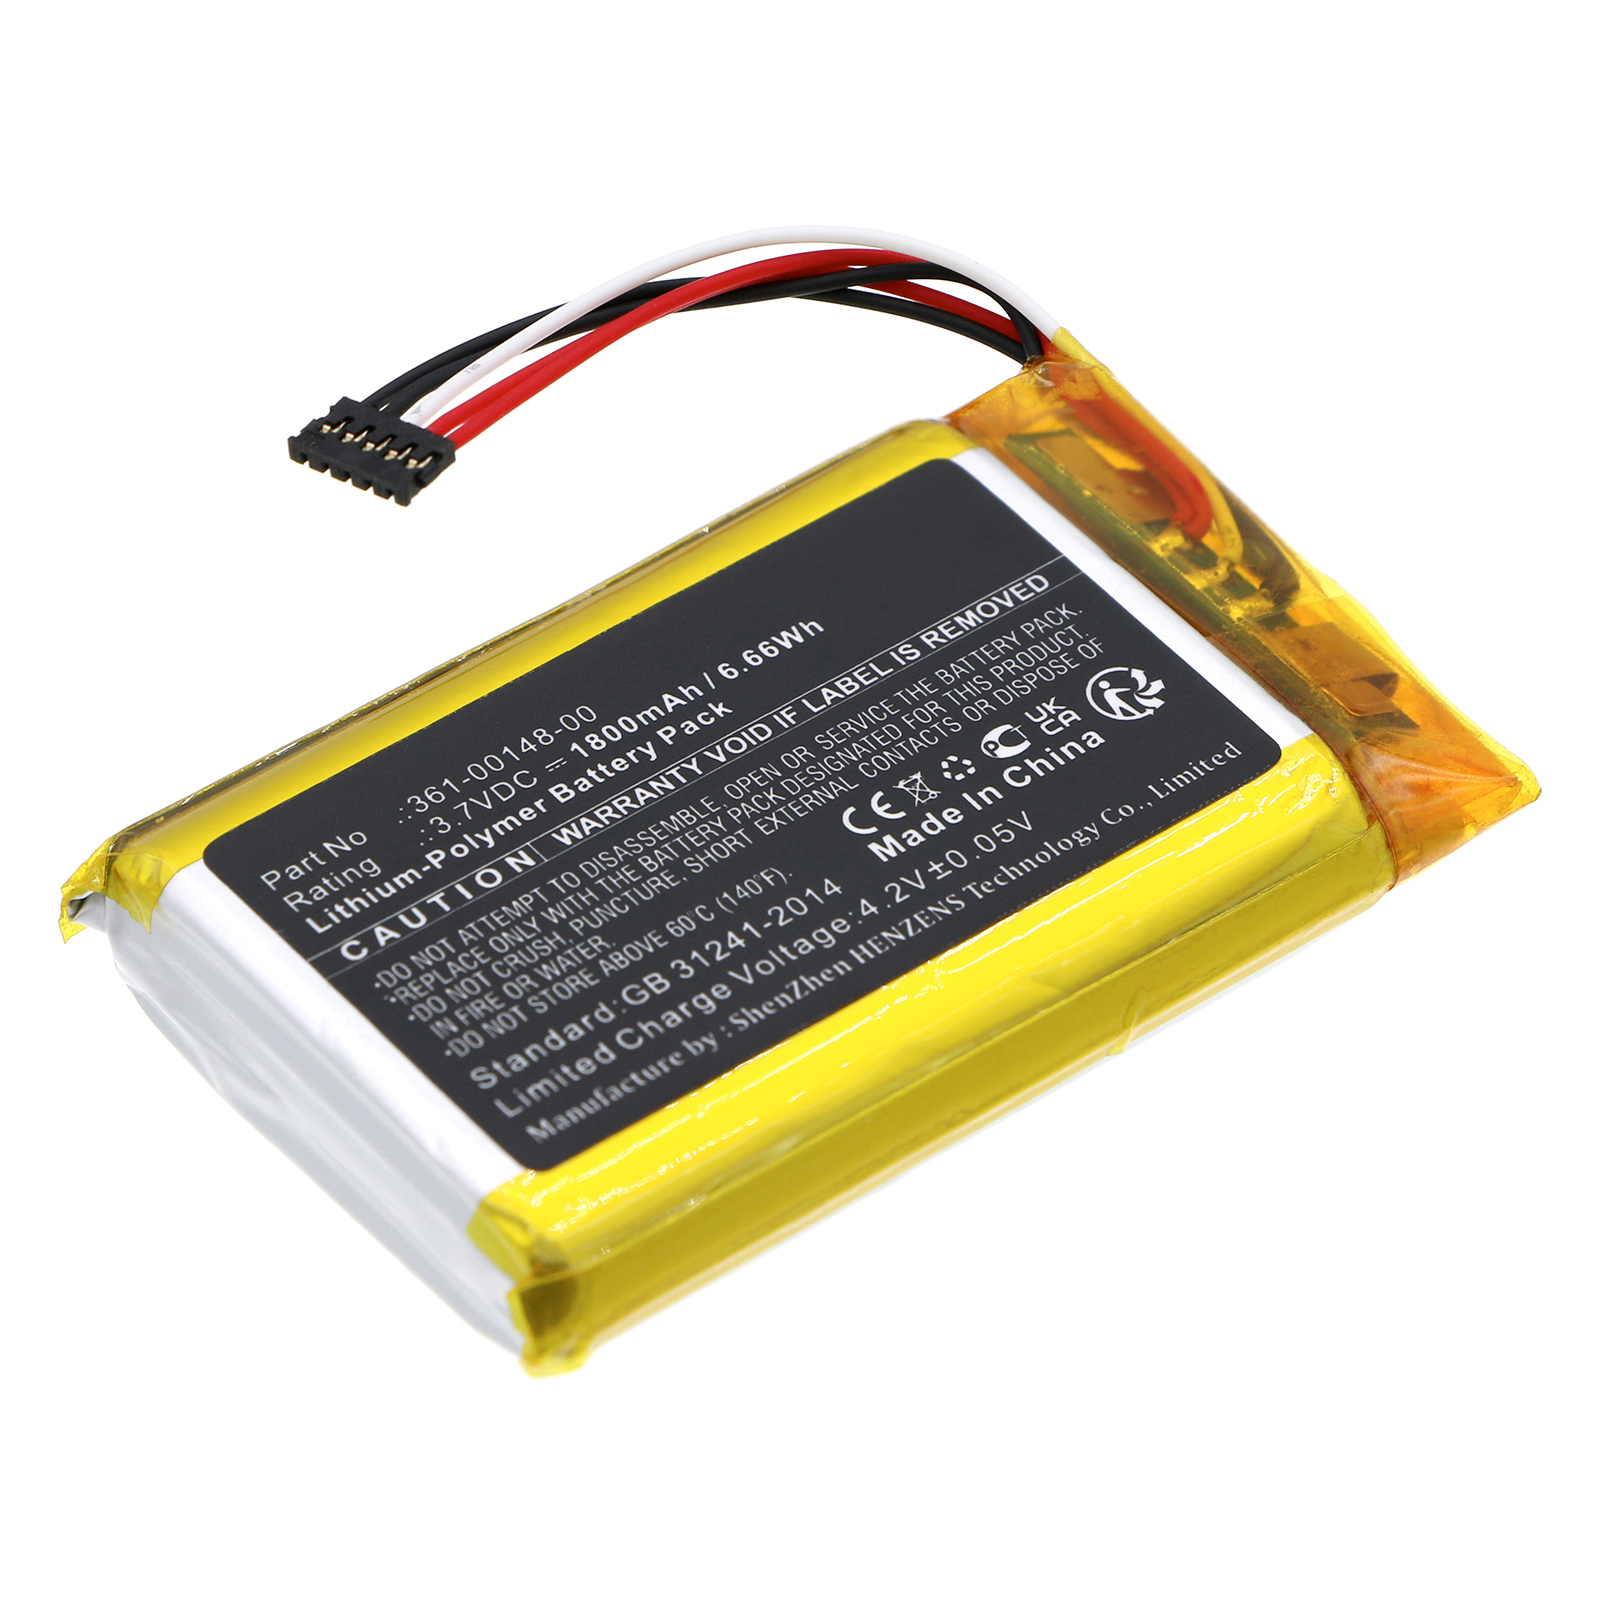 Synergy Digital Dog Collar Battery, Compatible with Garmin 361-00148-00 Dog Collar Battery (Li-Pol, 3.7V, 1800mAh)